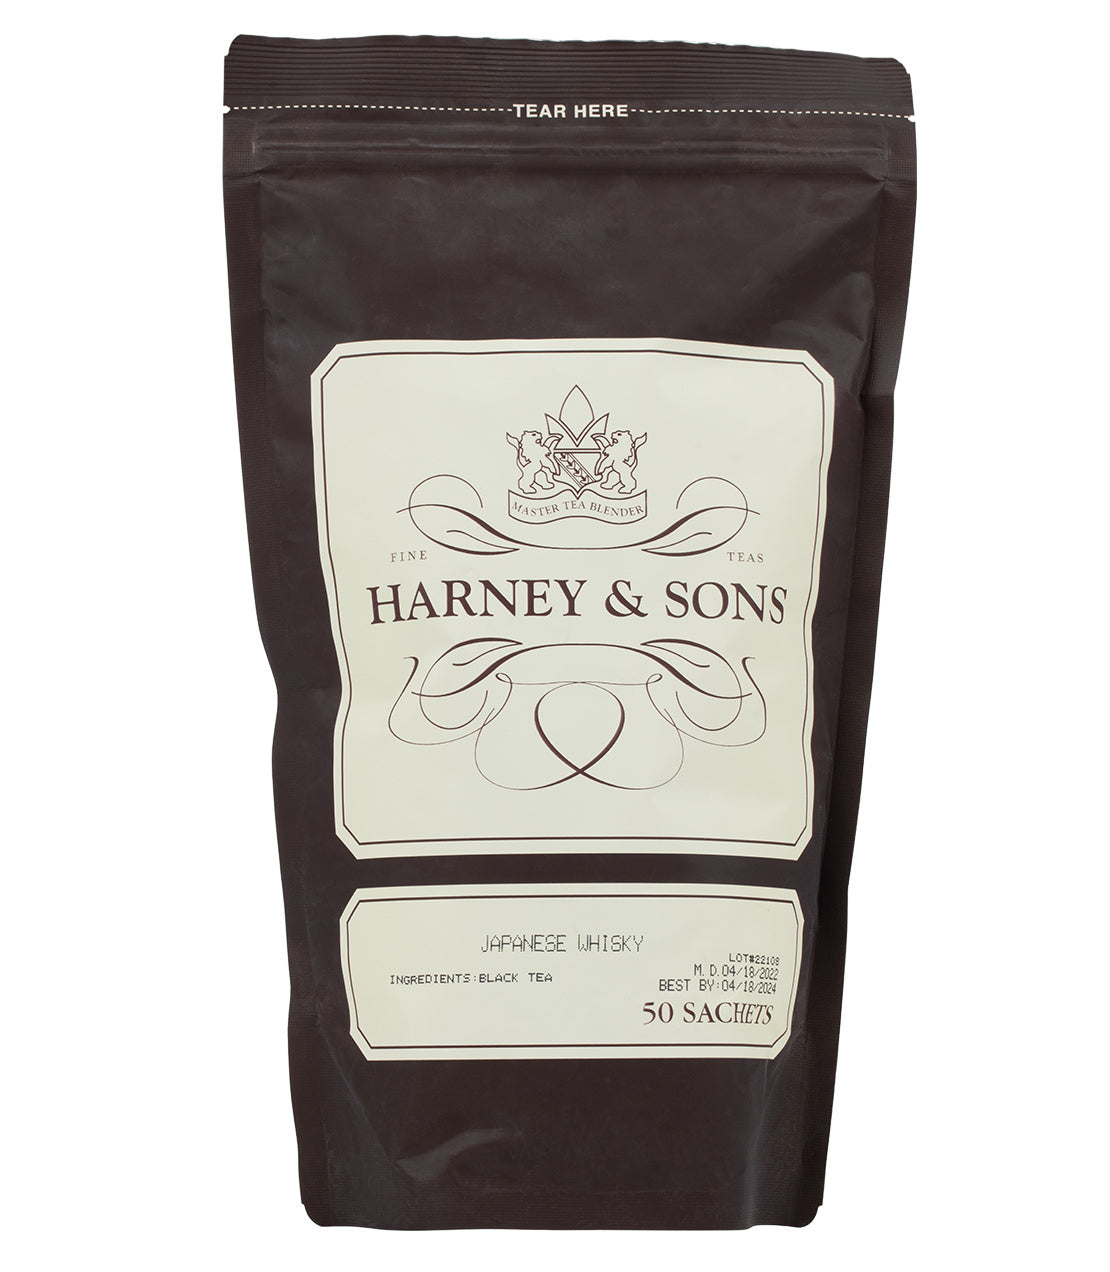 Japanese Whisky - Sachets Bag of 50 Sachets - Harney & Sons Fine Teas